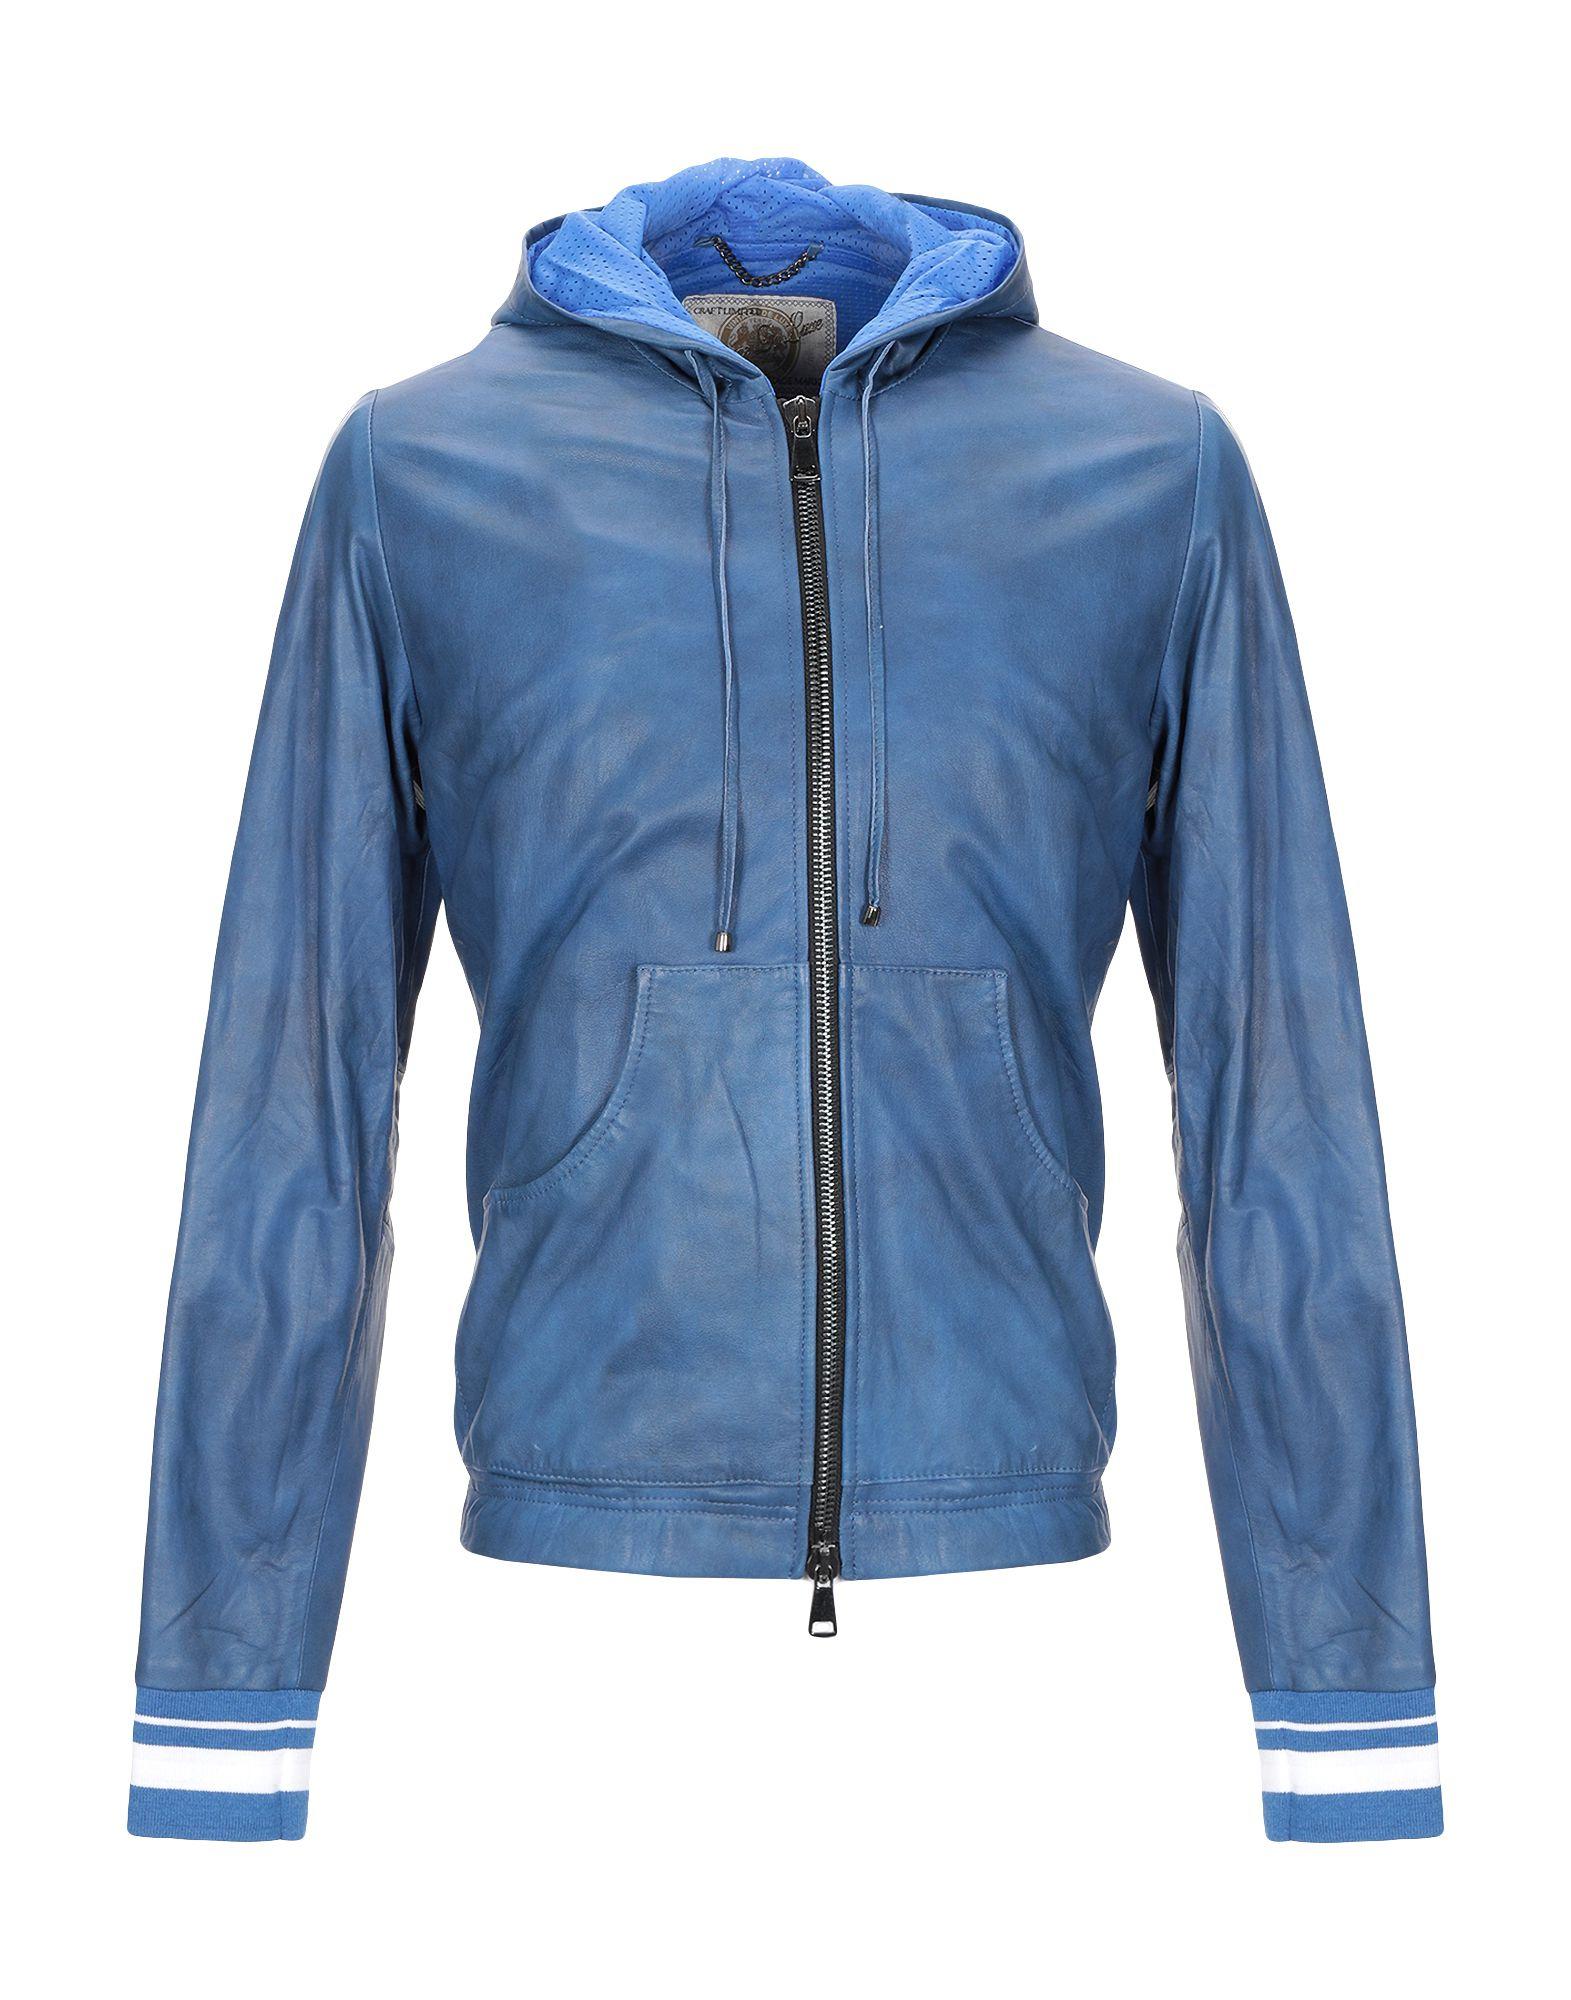 Vintage De Luxe Jacket in Blue for Men - Lyst